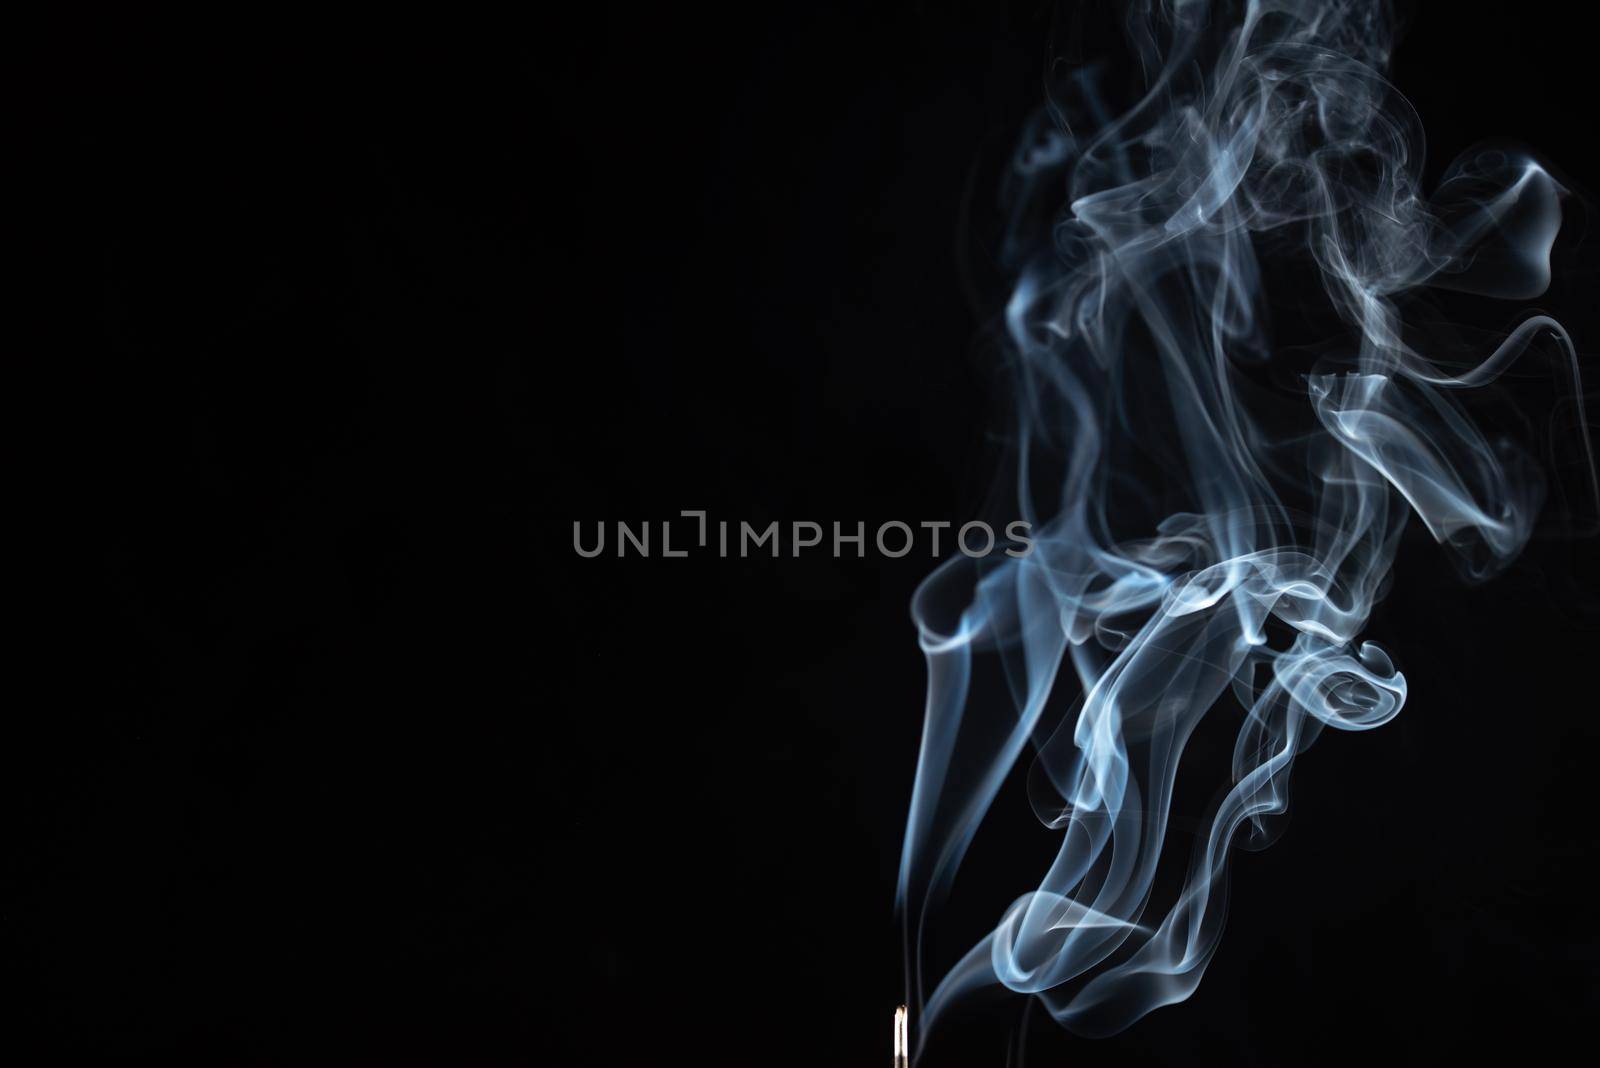 incense stick with smoke against black background by Iryna_Melnyk